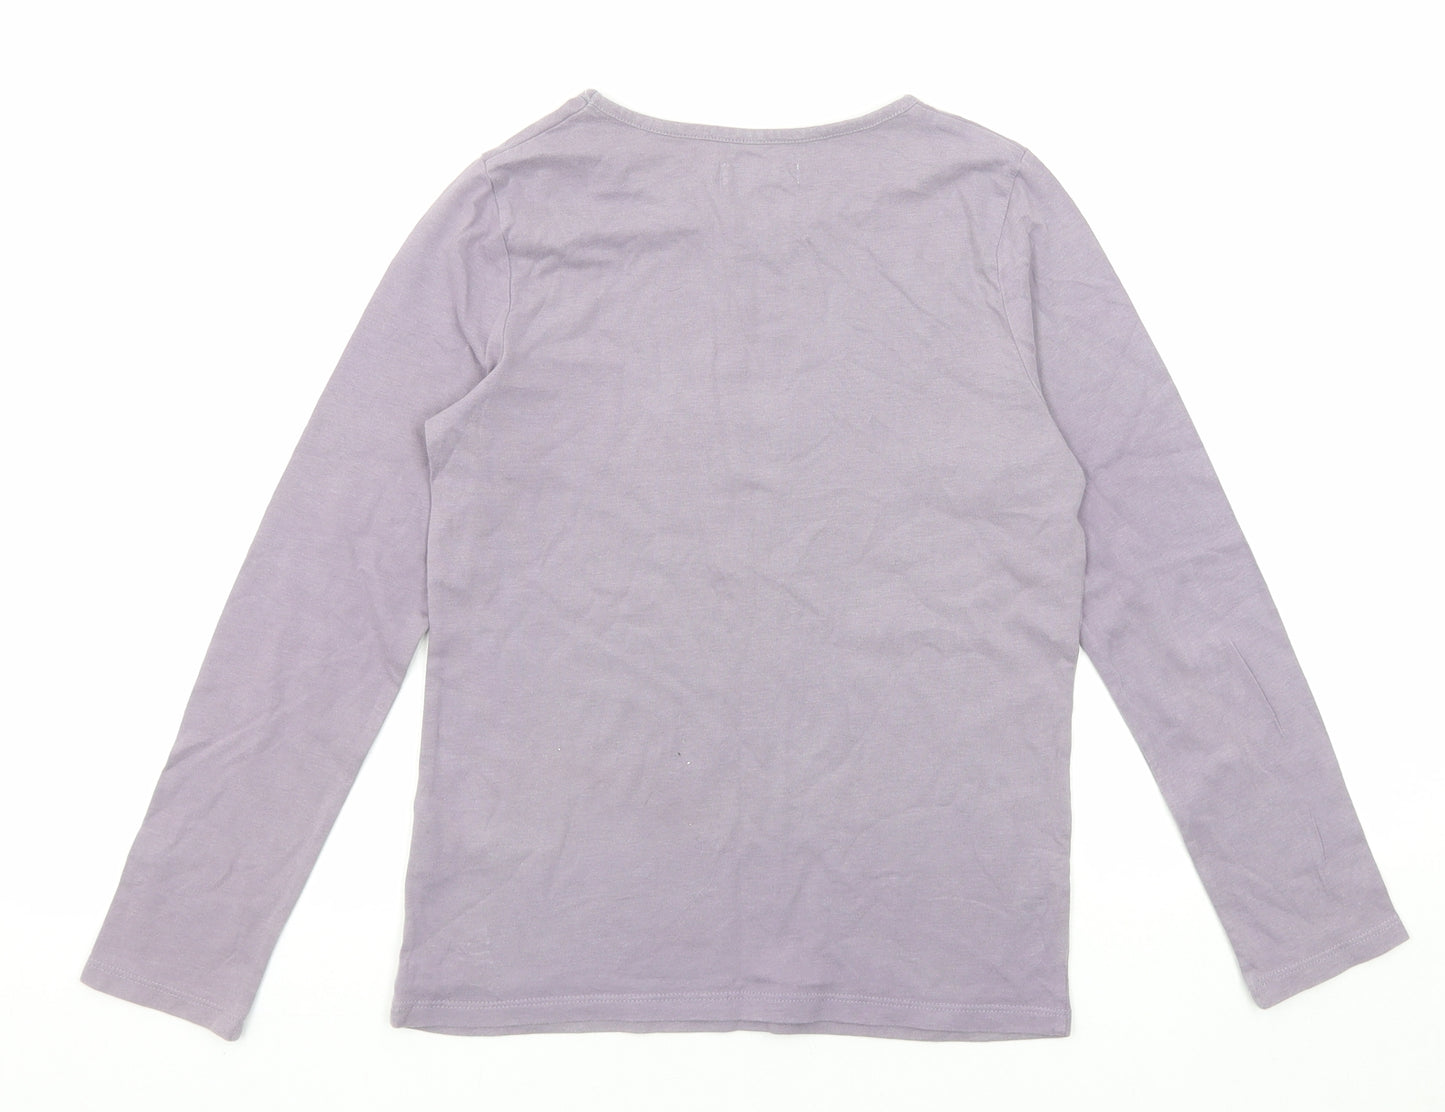 Mini Boden Girls Purple Cotton Basic T-Shirt Size 9-10 Years Round Neck Pullover - Deer